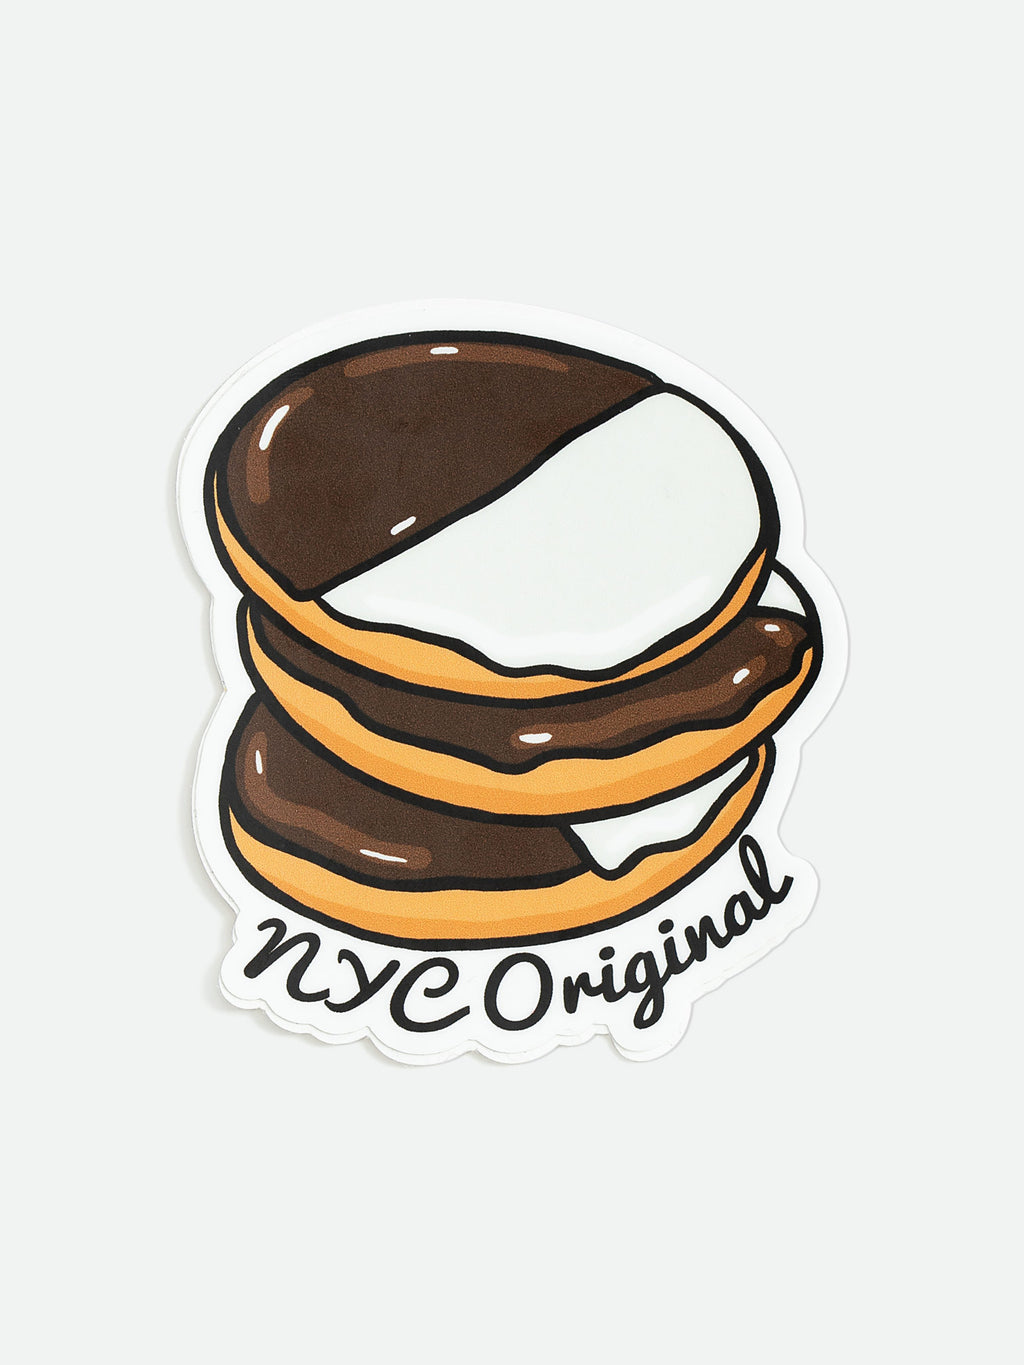 NYC Original Sticker - Mosaic the Label